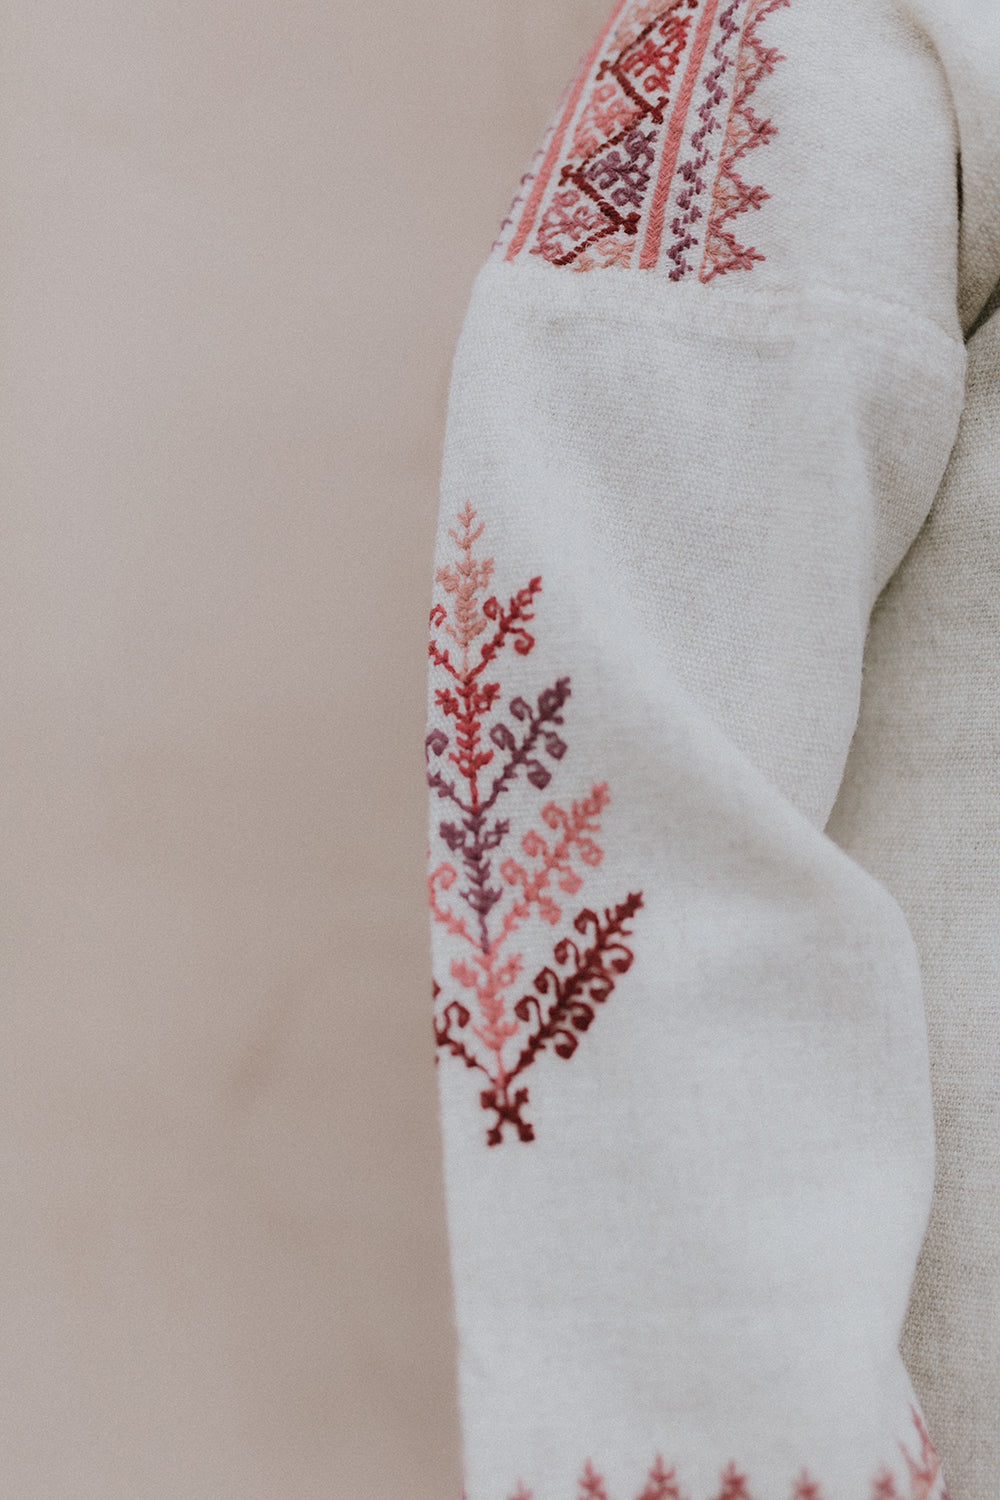 Handwoven Wool Tree of Life Tunic in Cochineal Tones - heritagebyhand